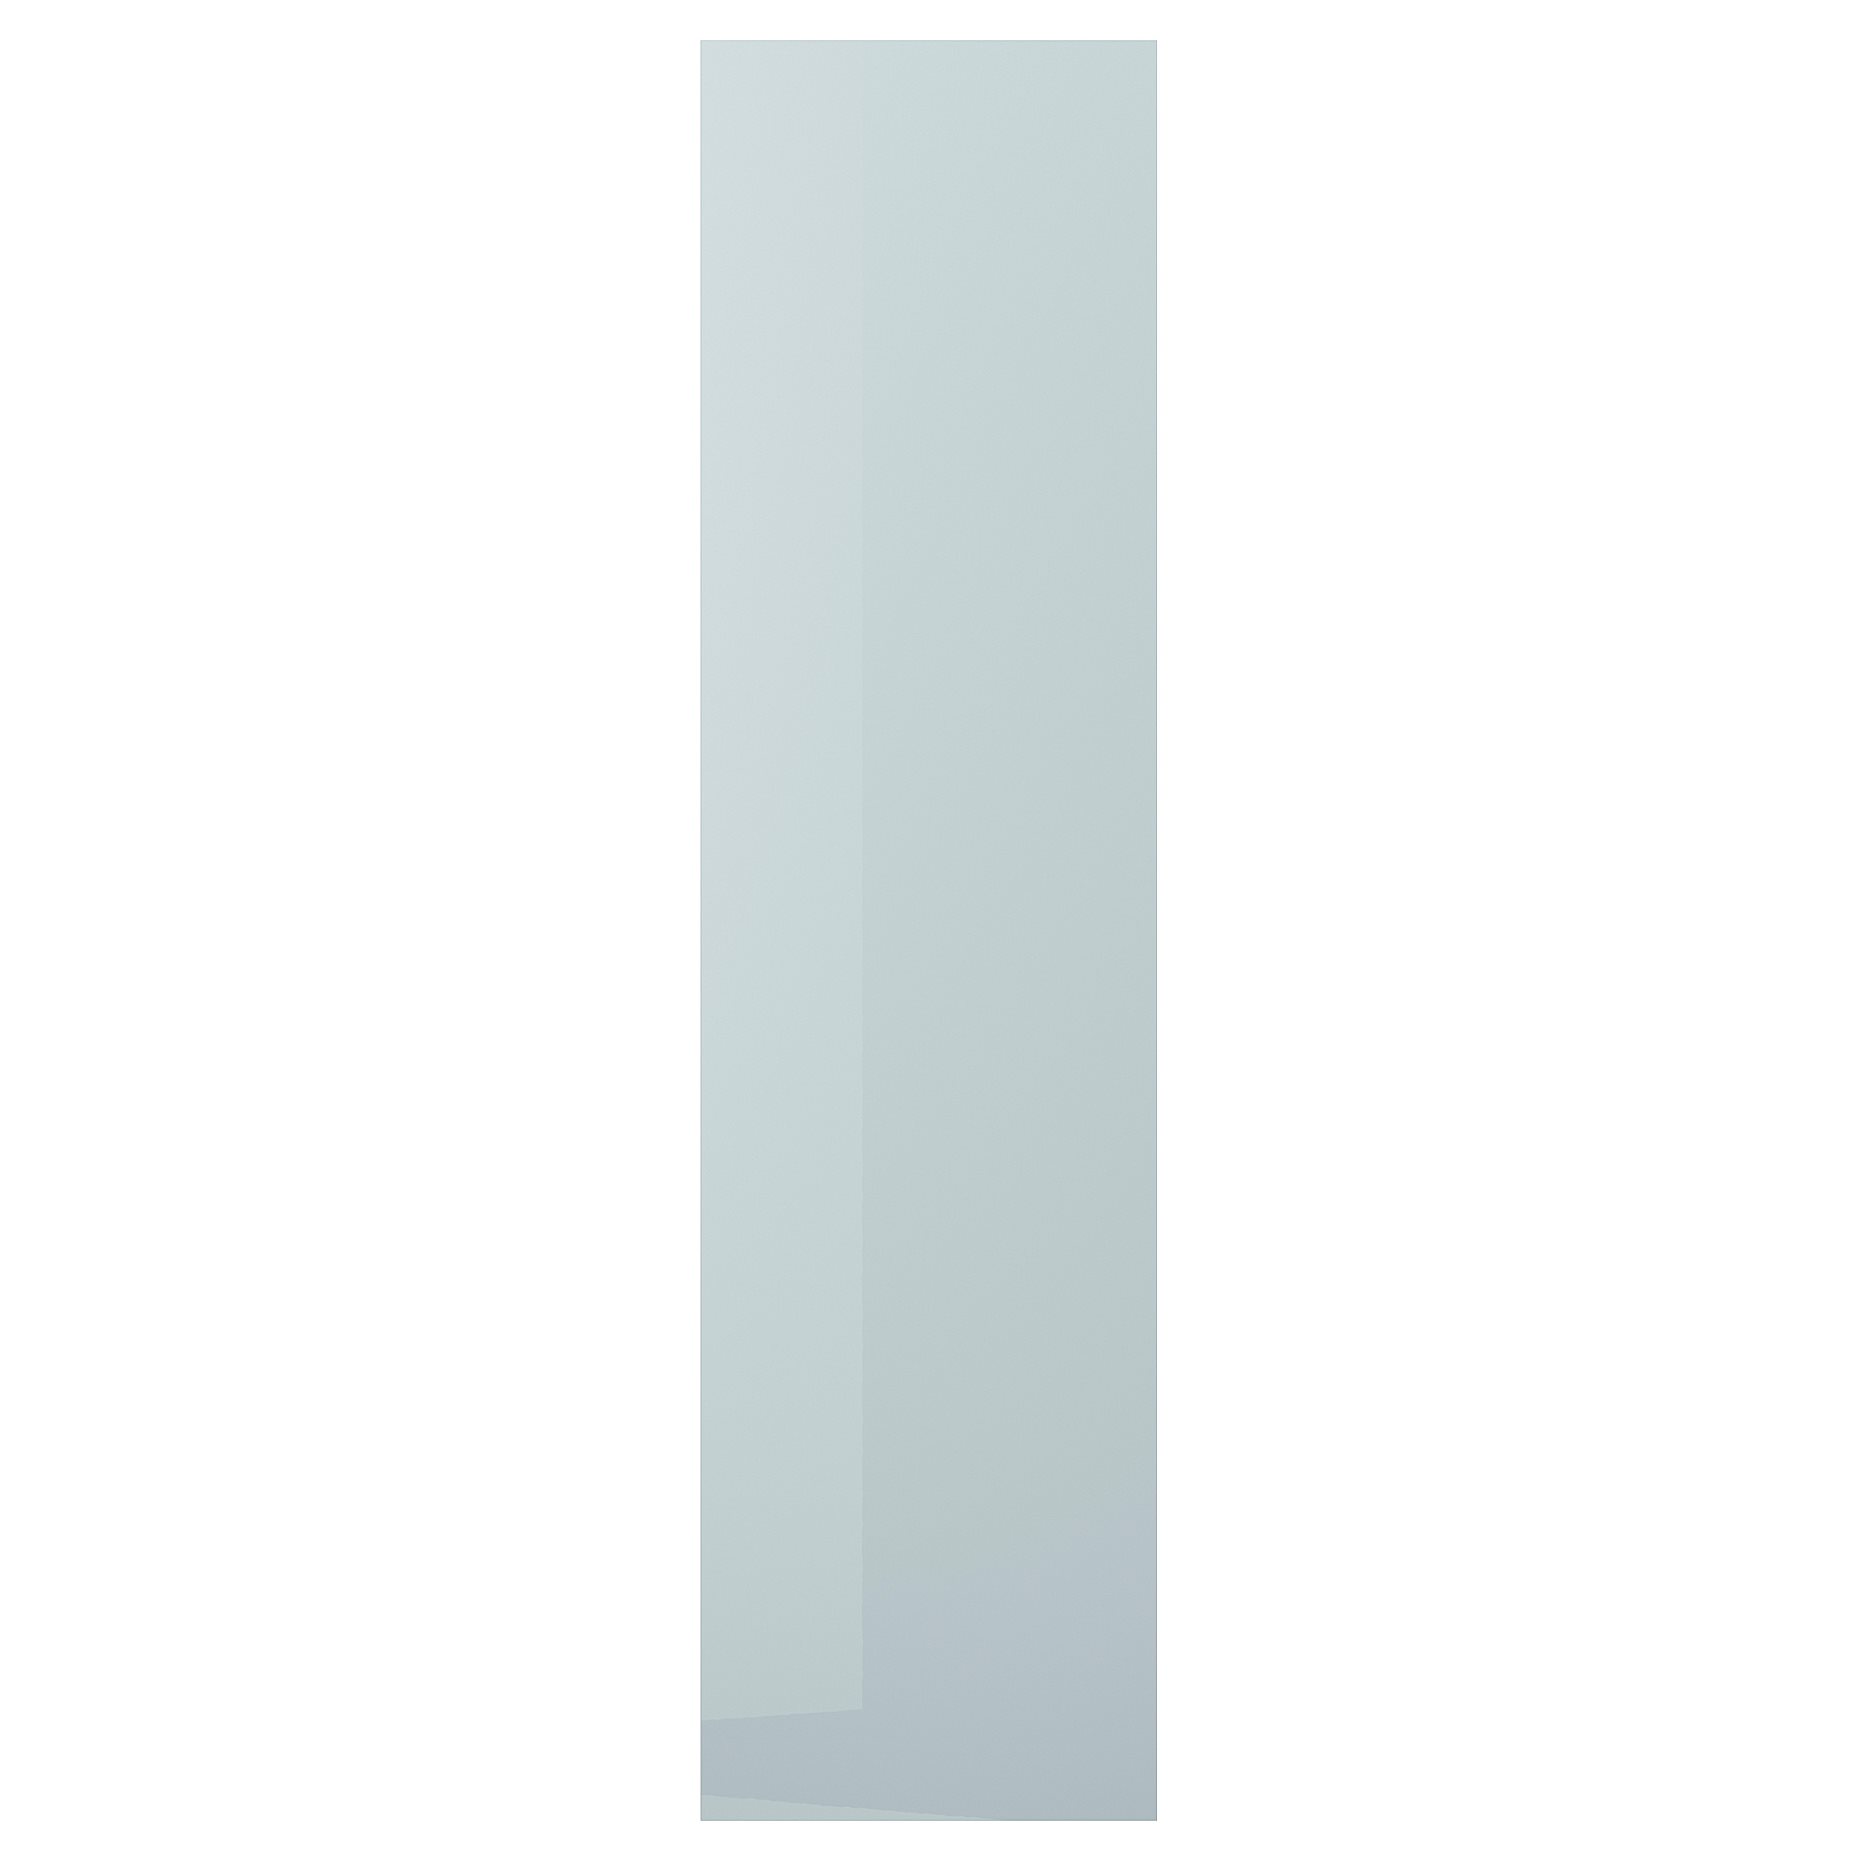 KALLARP, cover panel/high-gloss, 62x240 cm, 005.201.33